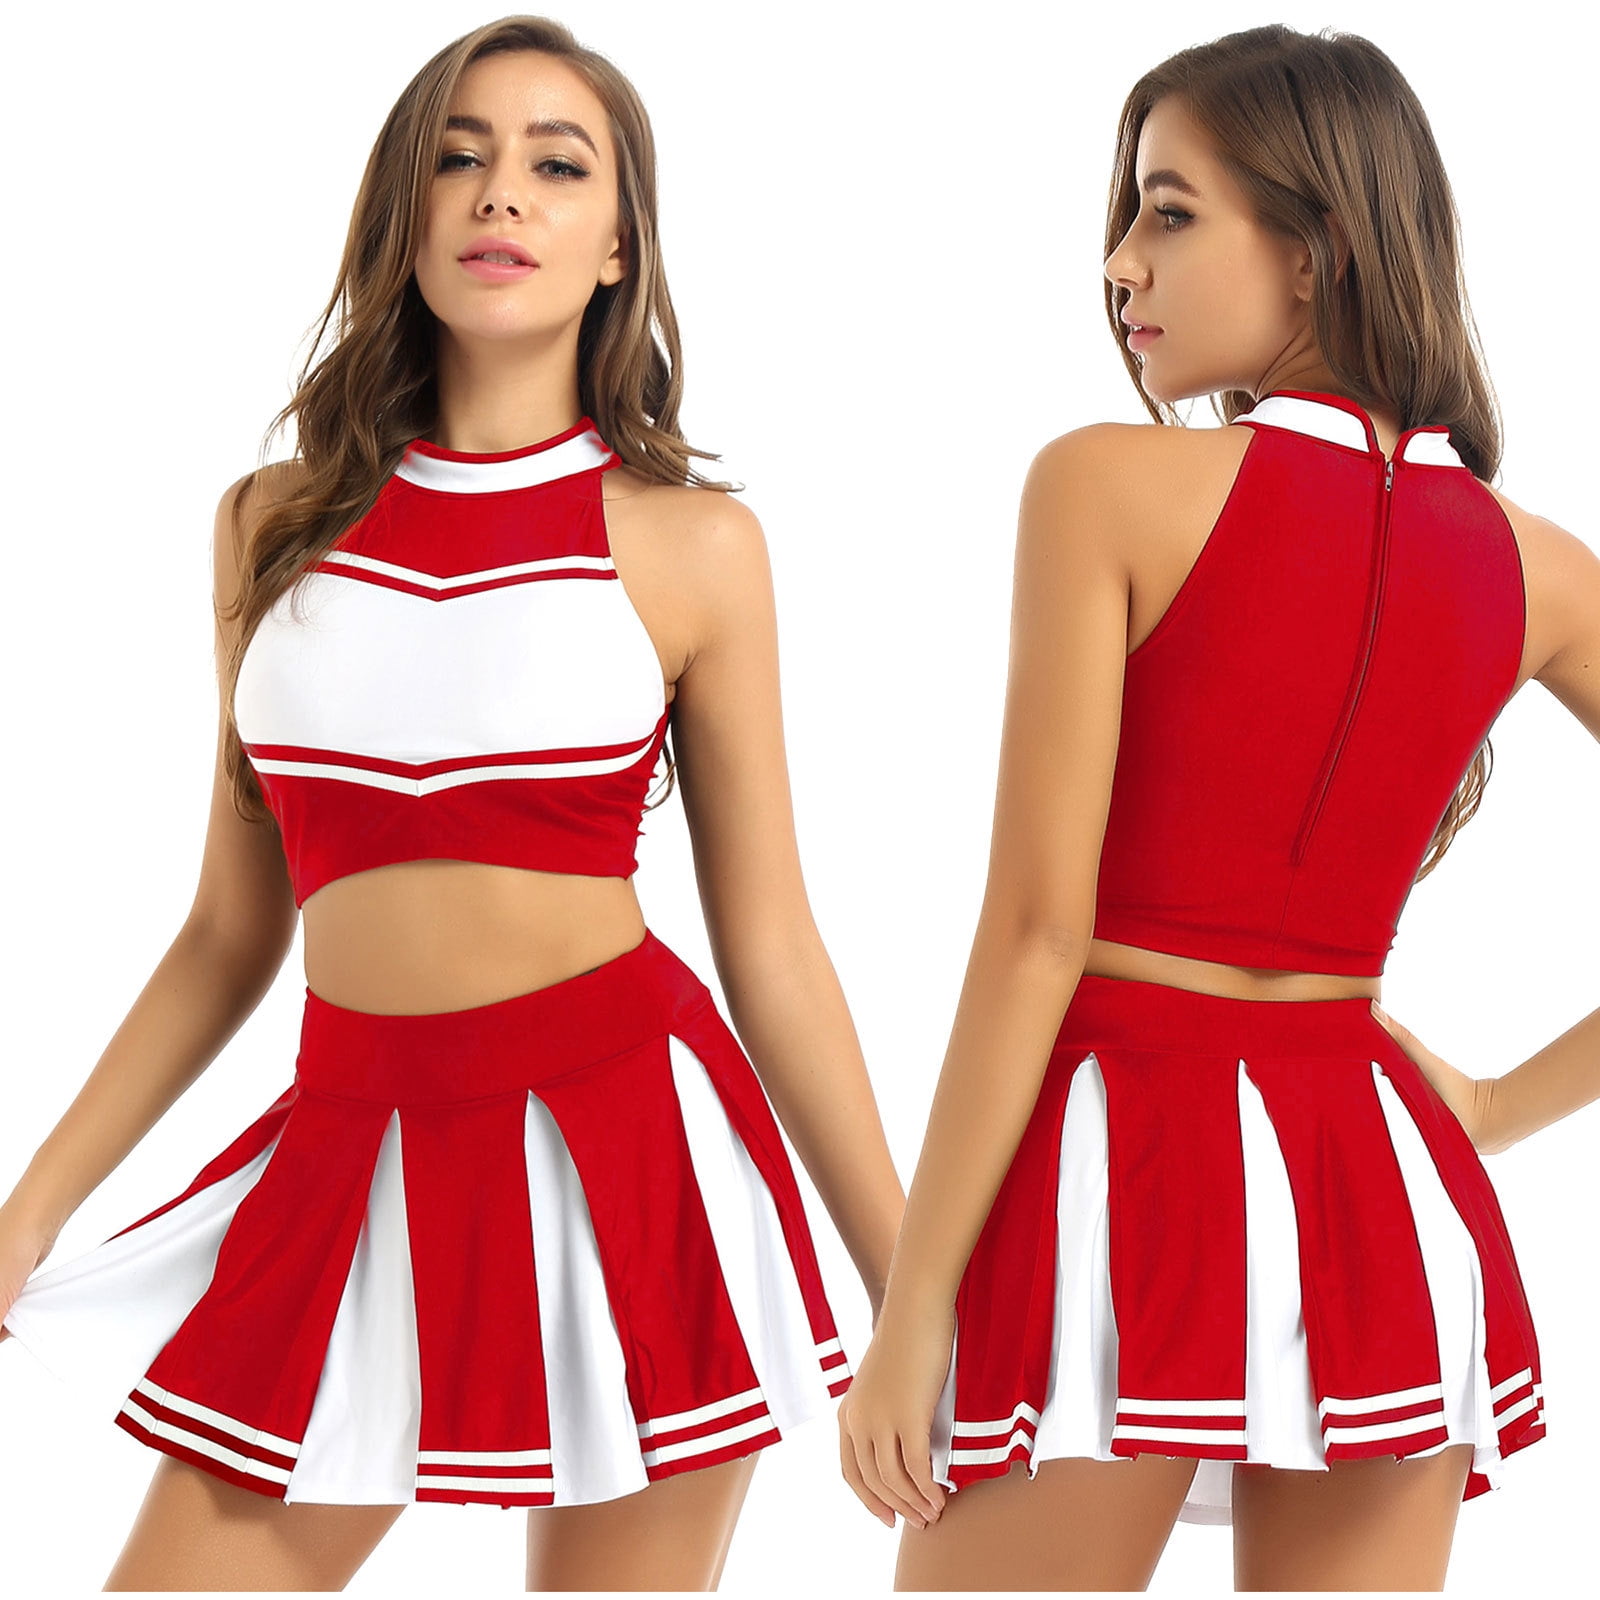 iiniim Women Cheer Leader School Girl Cheerleading Uniform Musical Crop Top  Pleated Skirt Outfits Red S 